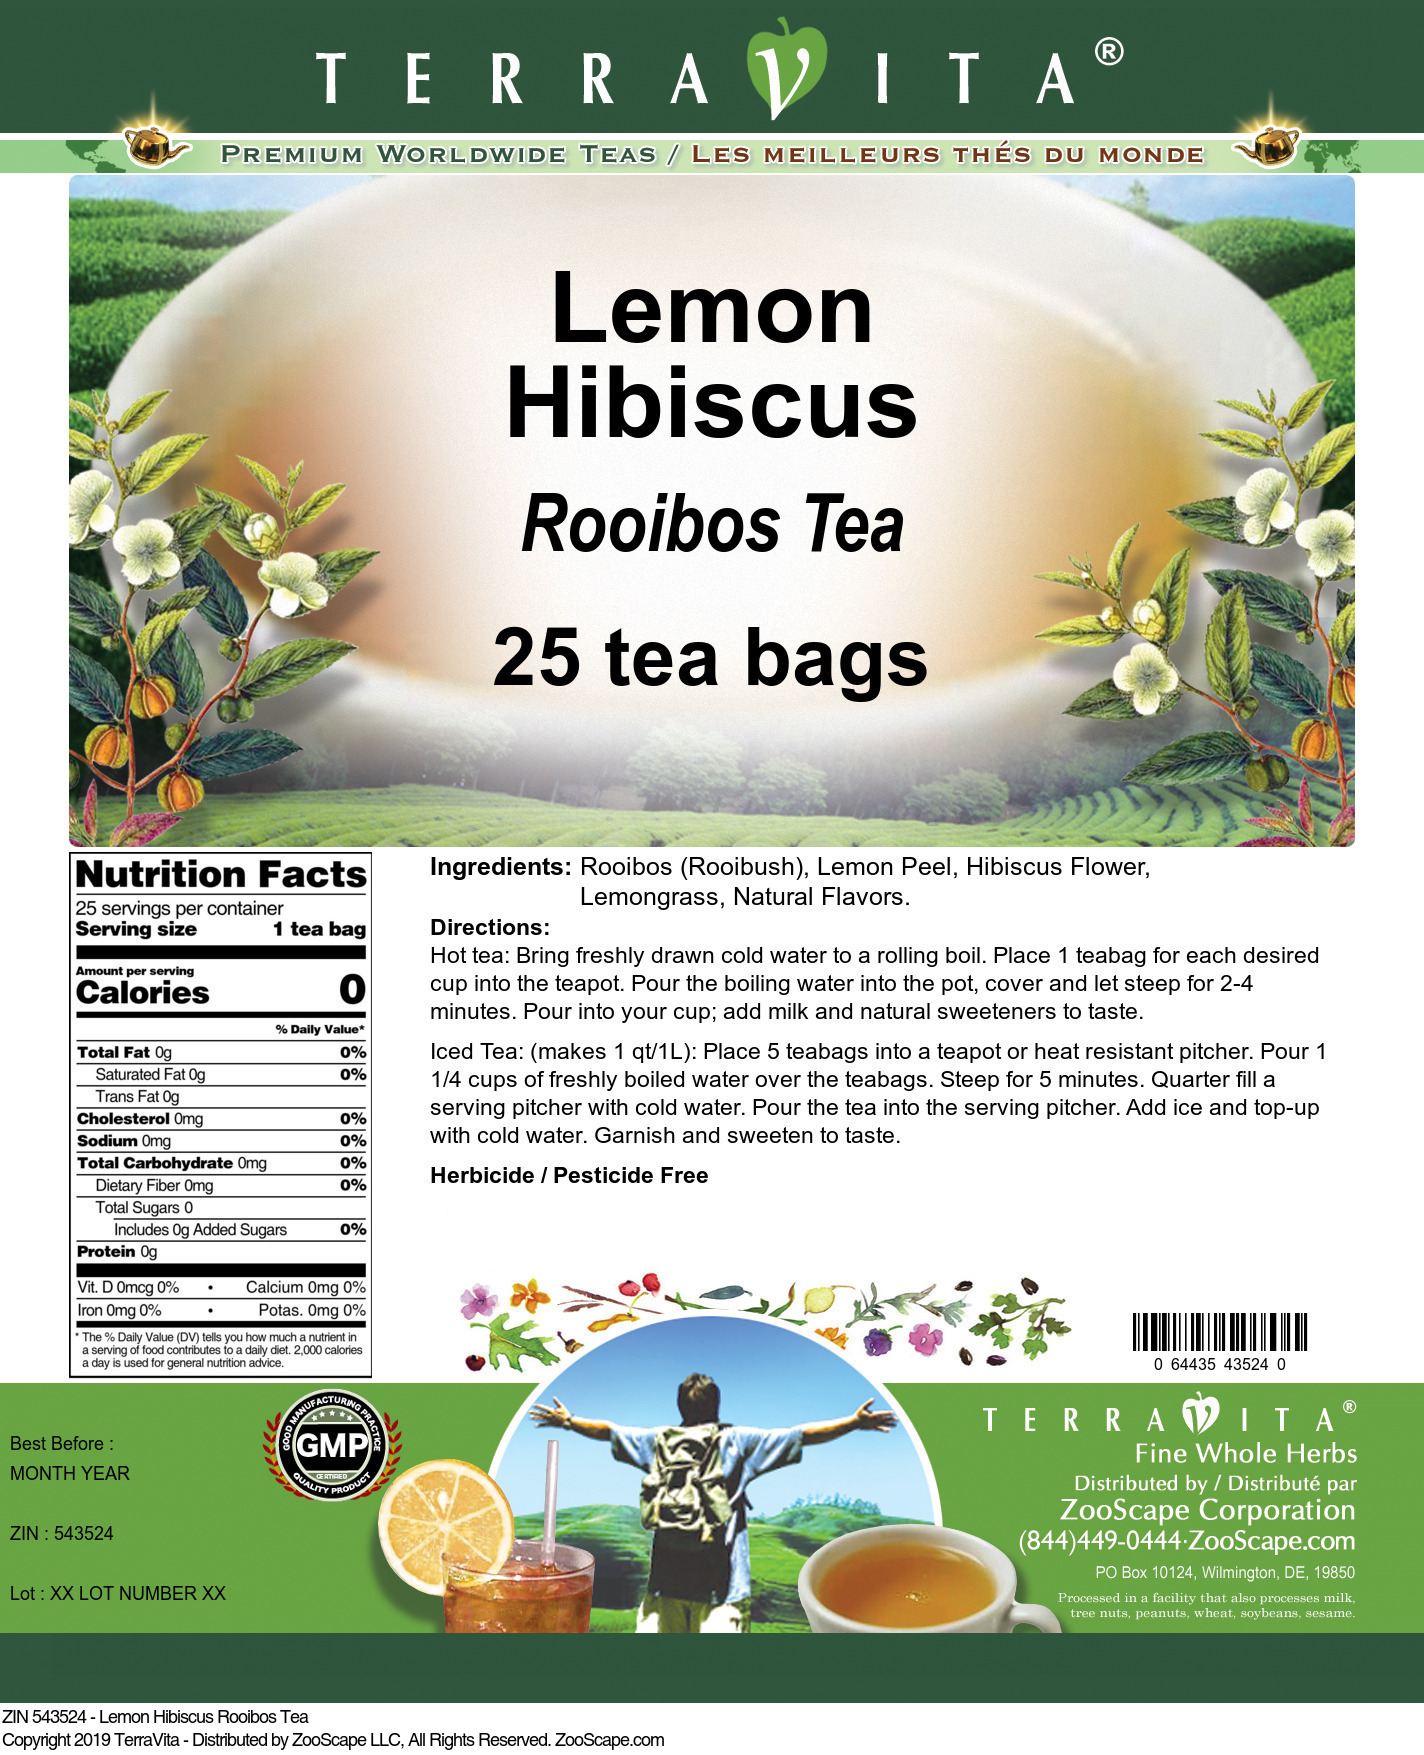 Lemon Hibiscus Rooibos Tea - Label